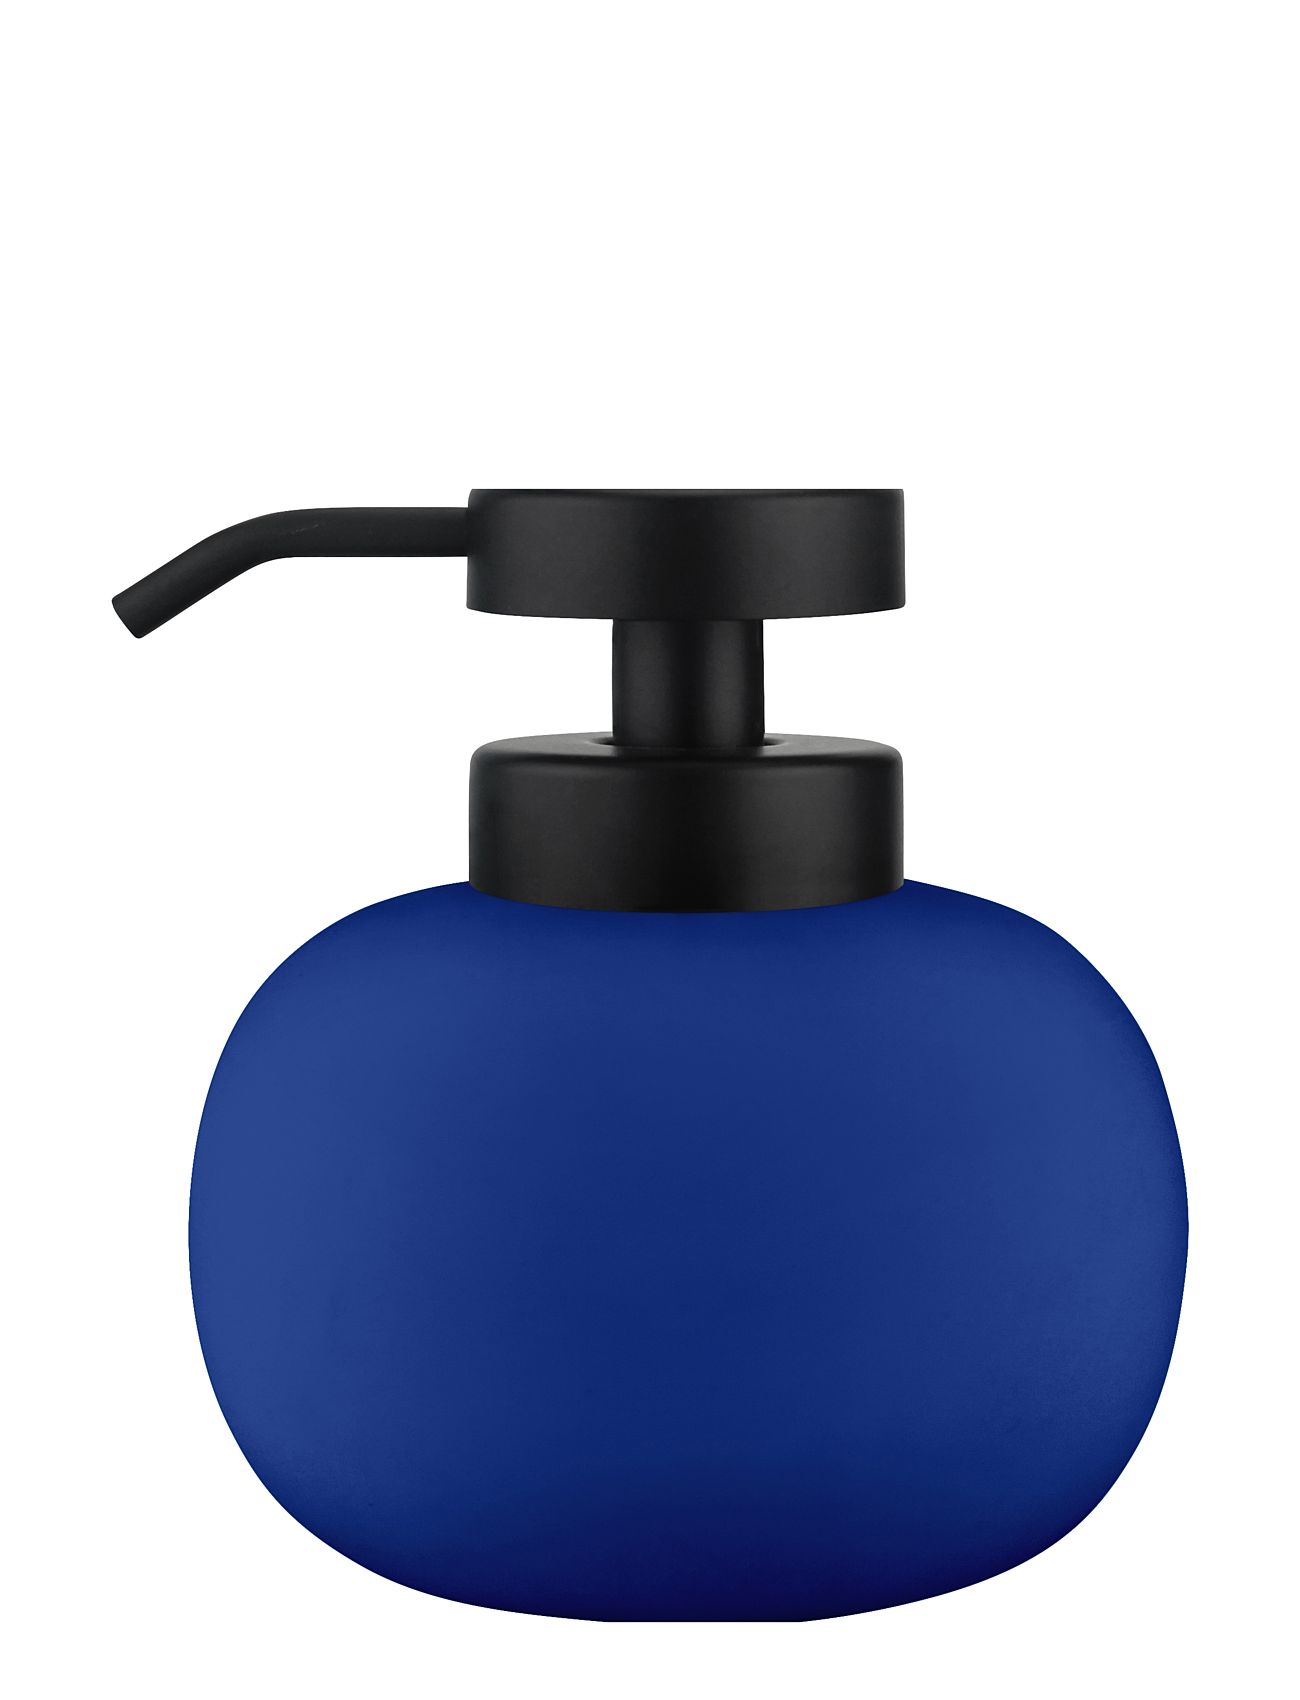 Lotus Dispenser Low Home Decoration Bathroom Interior Soap Pumps & Soap Cups Blue Mette Ditmer